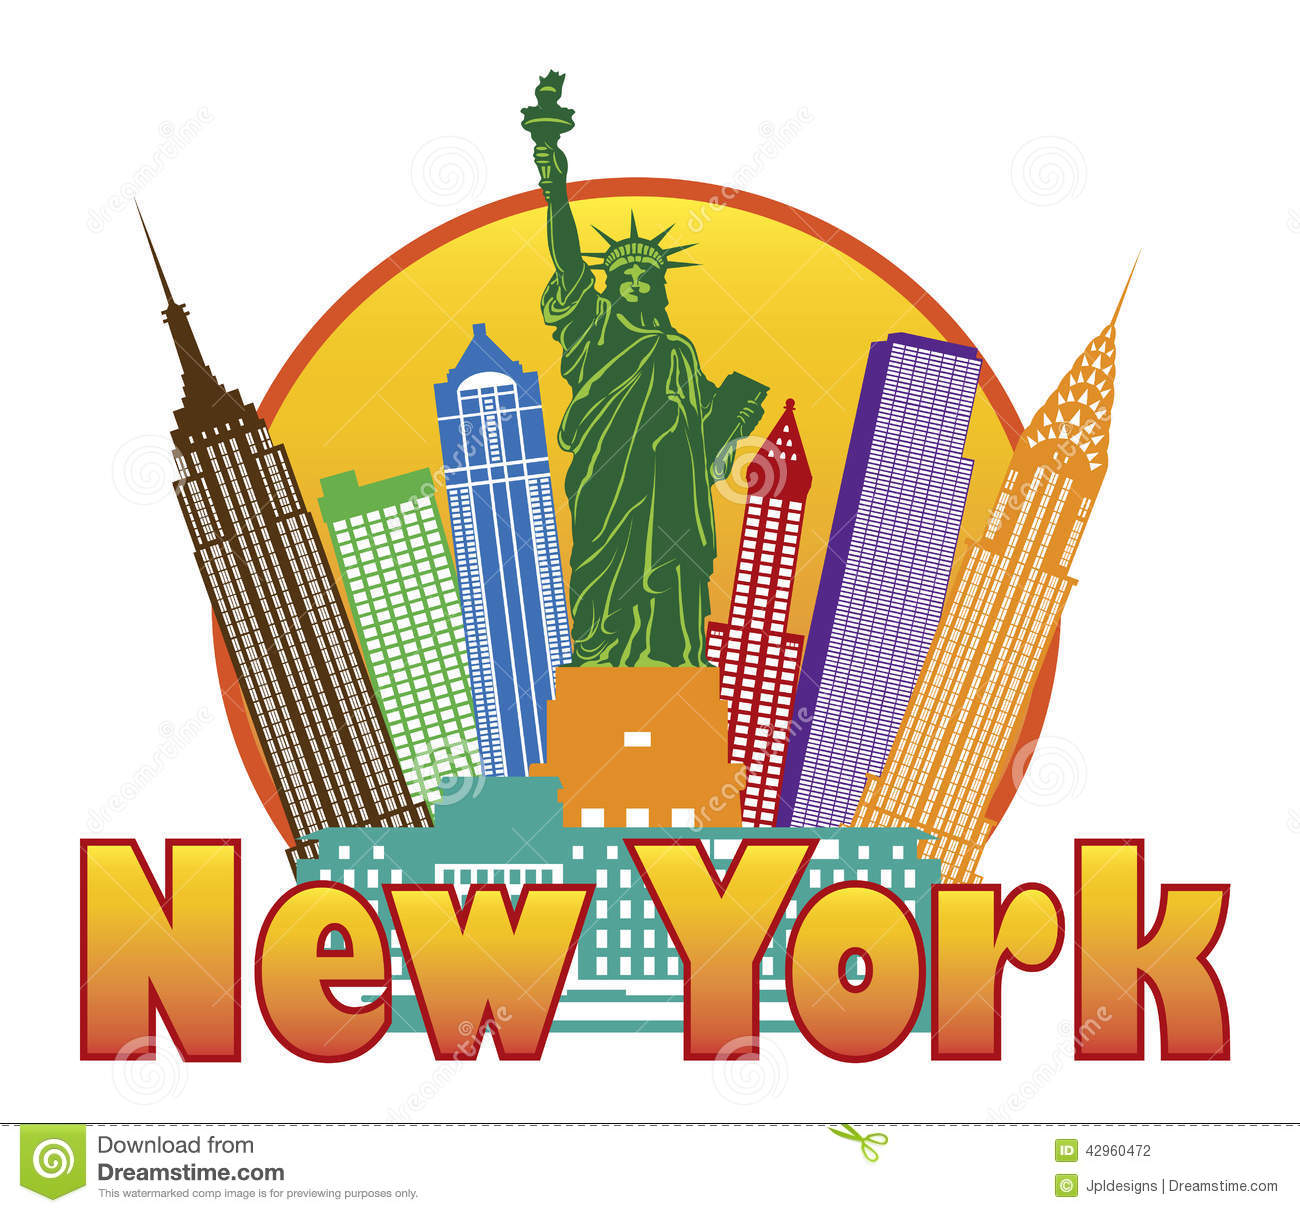 new york skyline: Illustratio